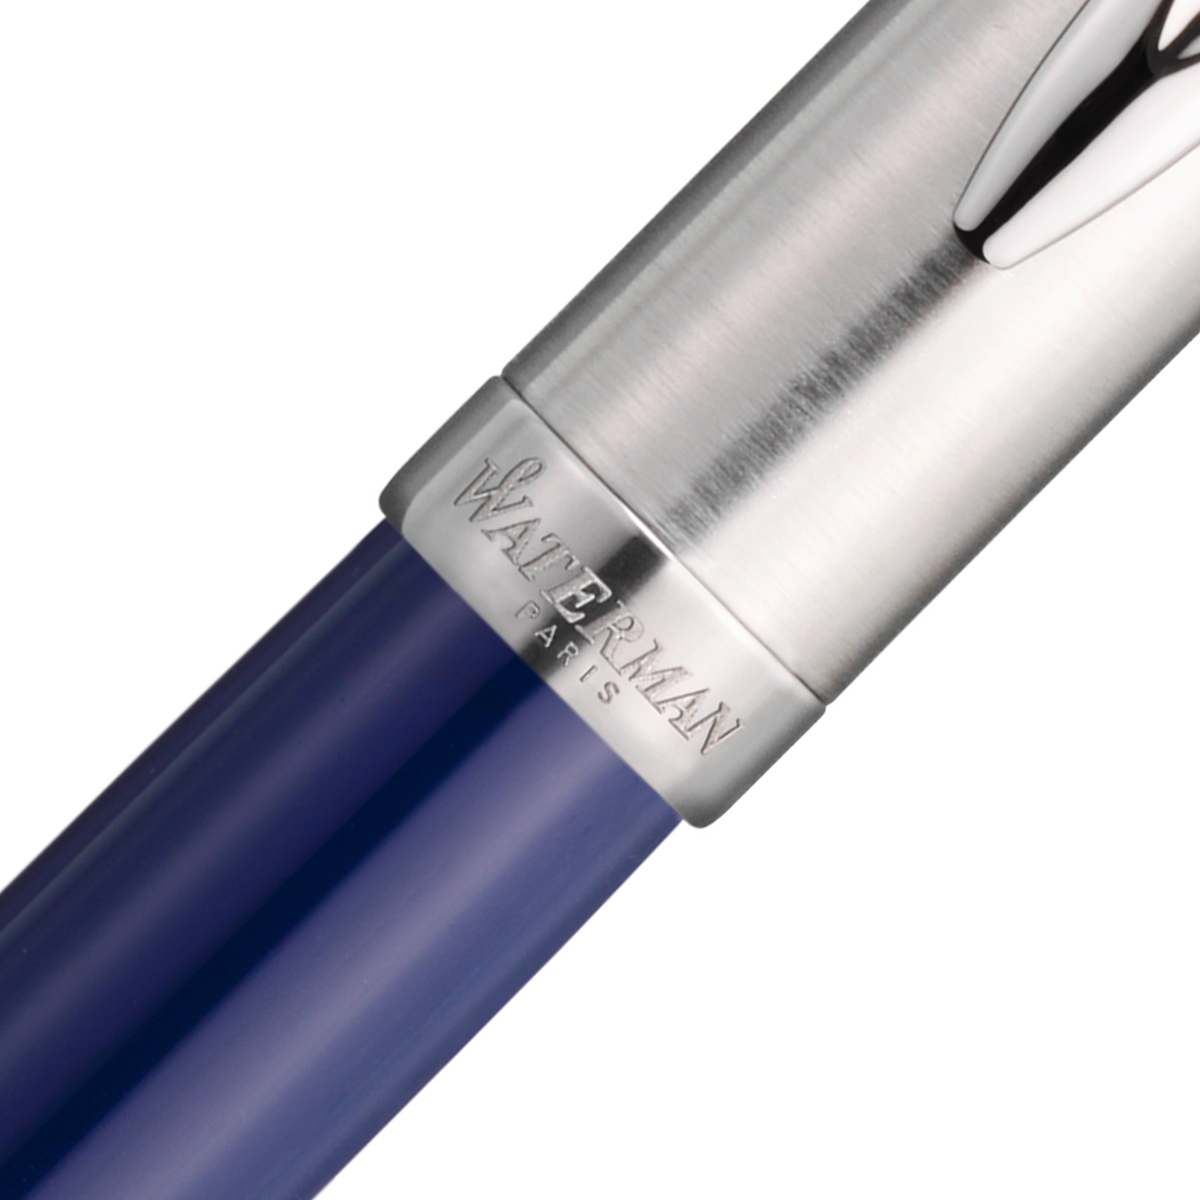 Emblème Blue/Chrome Ballpoint Pen in the group Pens / Fine Writing / Ballpoint Pens at Pen Store (128051)